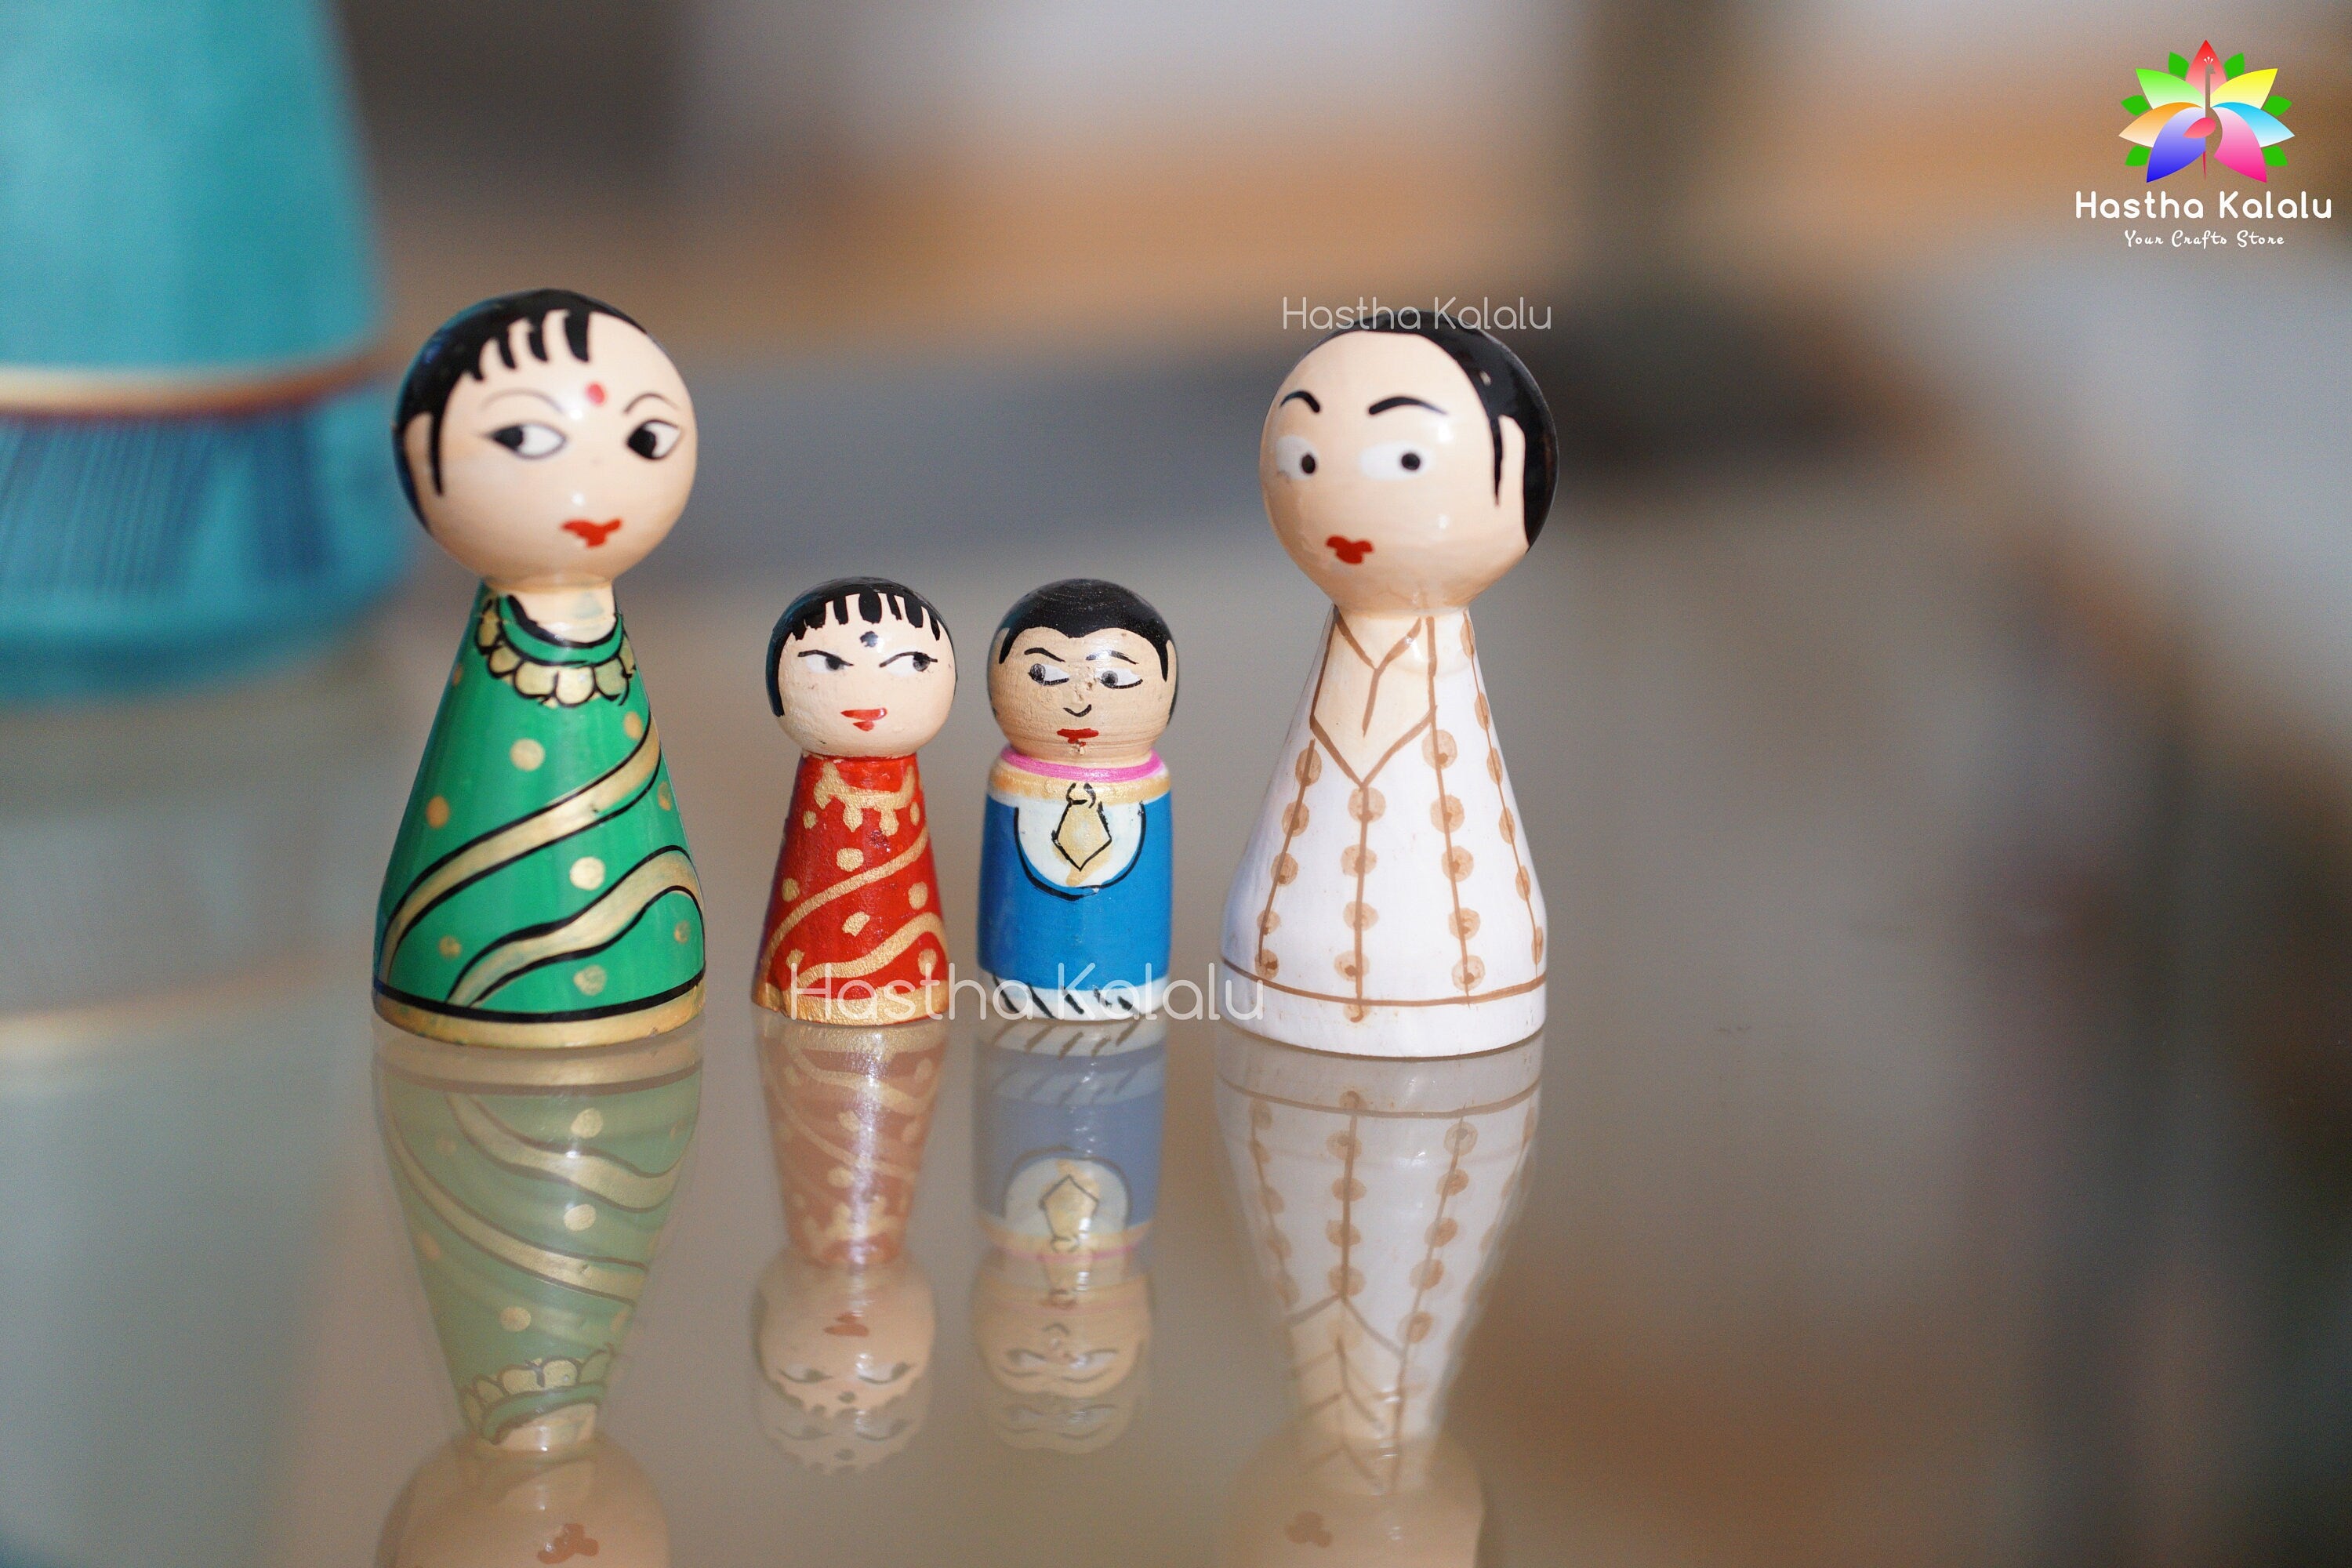 Handmade 3 Inch Tall Wooden Family Peg Dolls